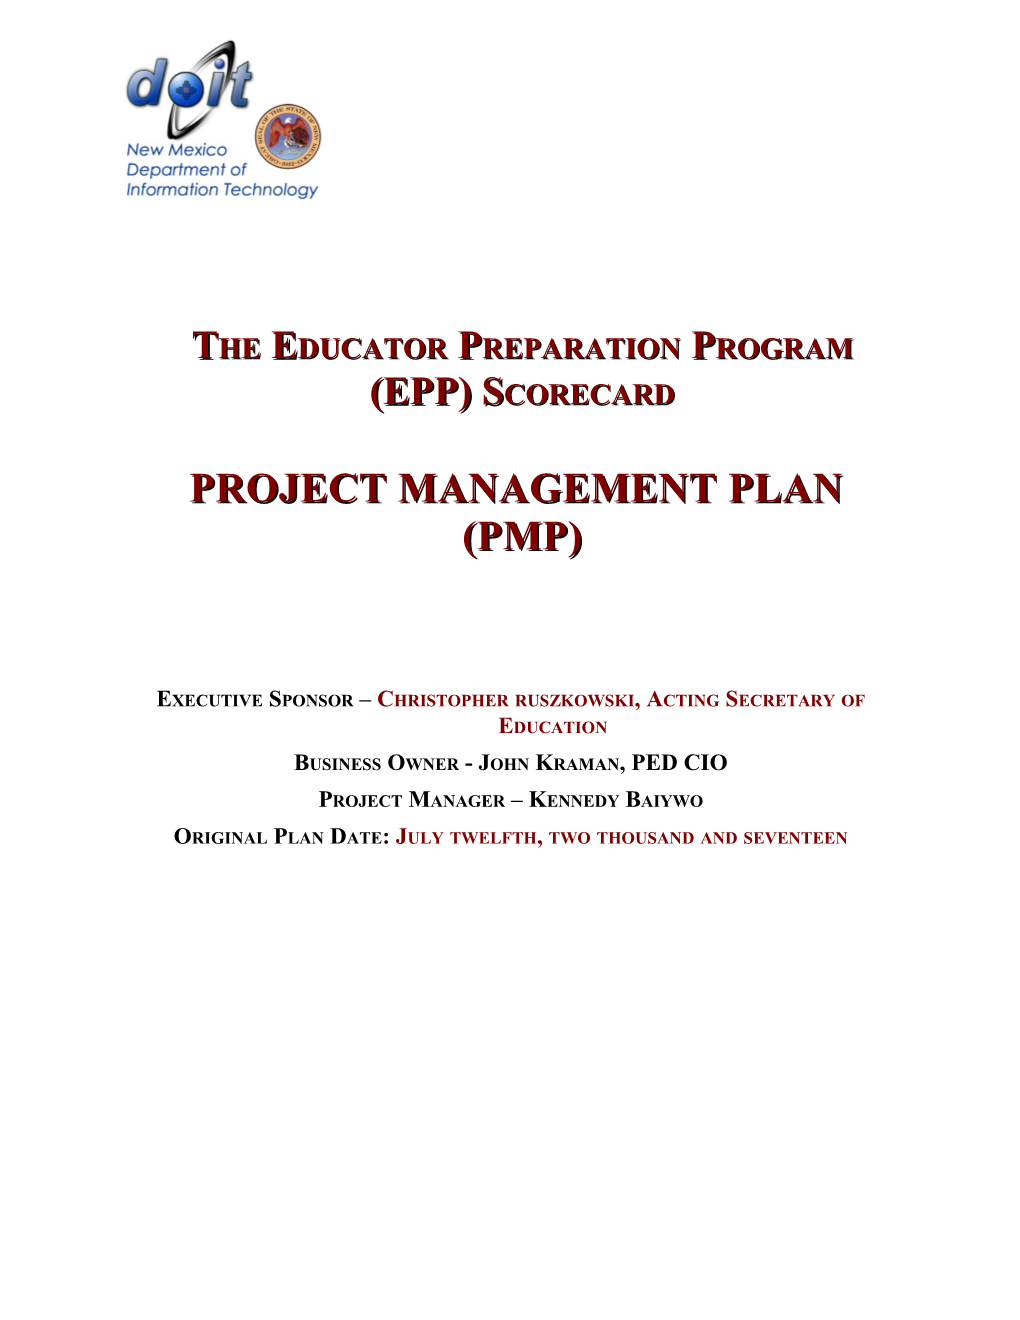 The Educator Preparation Program (EPP) Scorecard